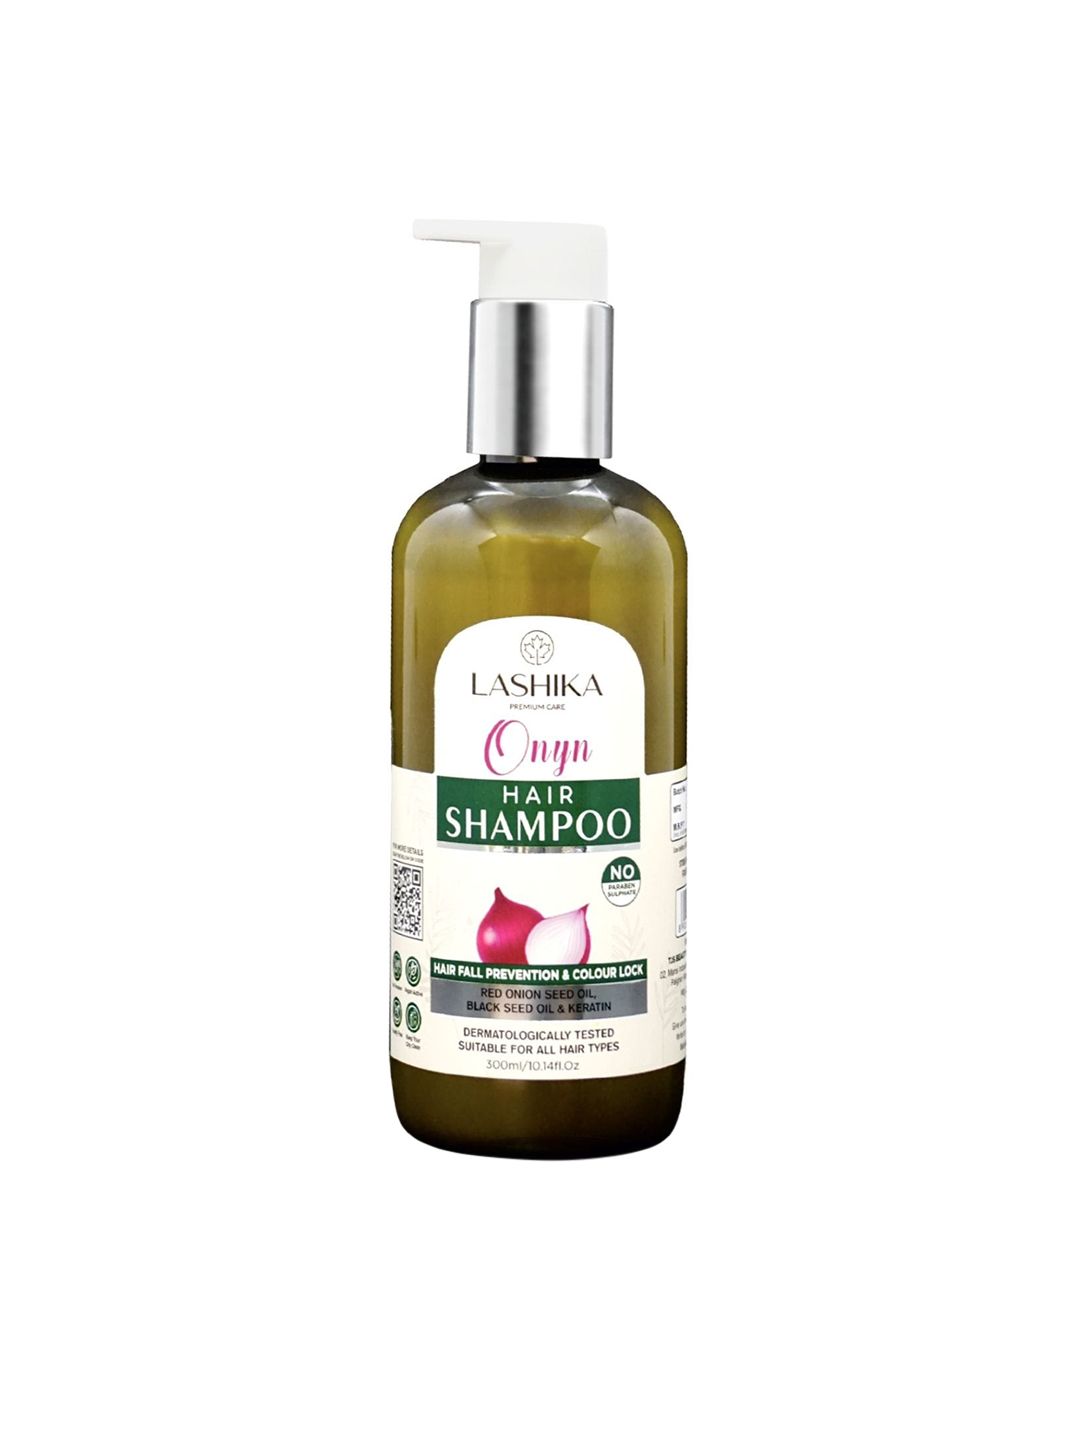 LASHIKA Onyn Hair Shampoo 300 ml Price in India